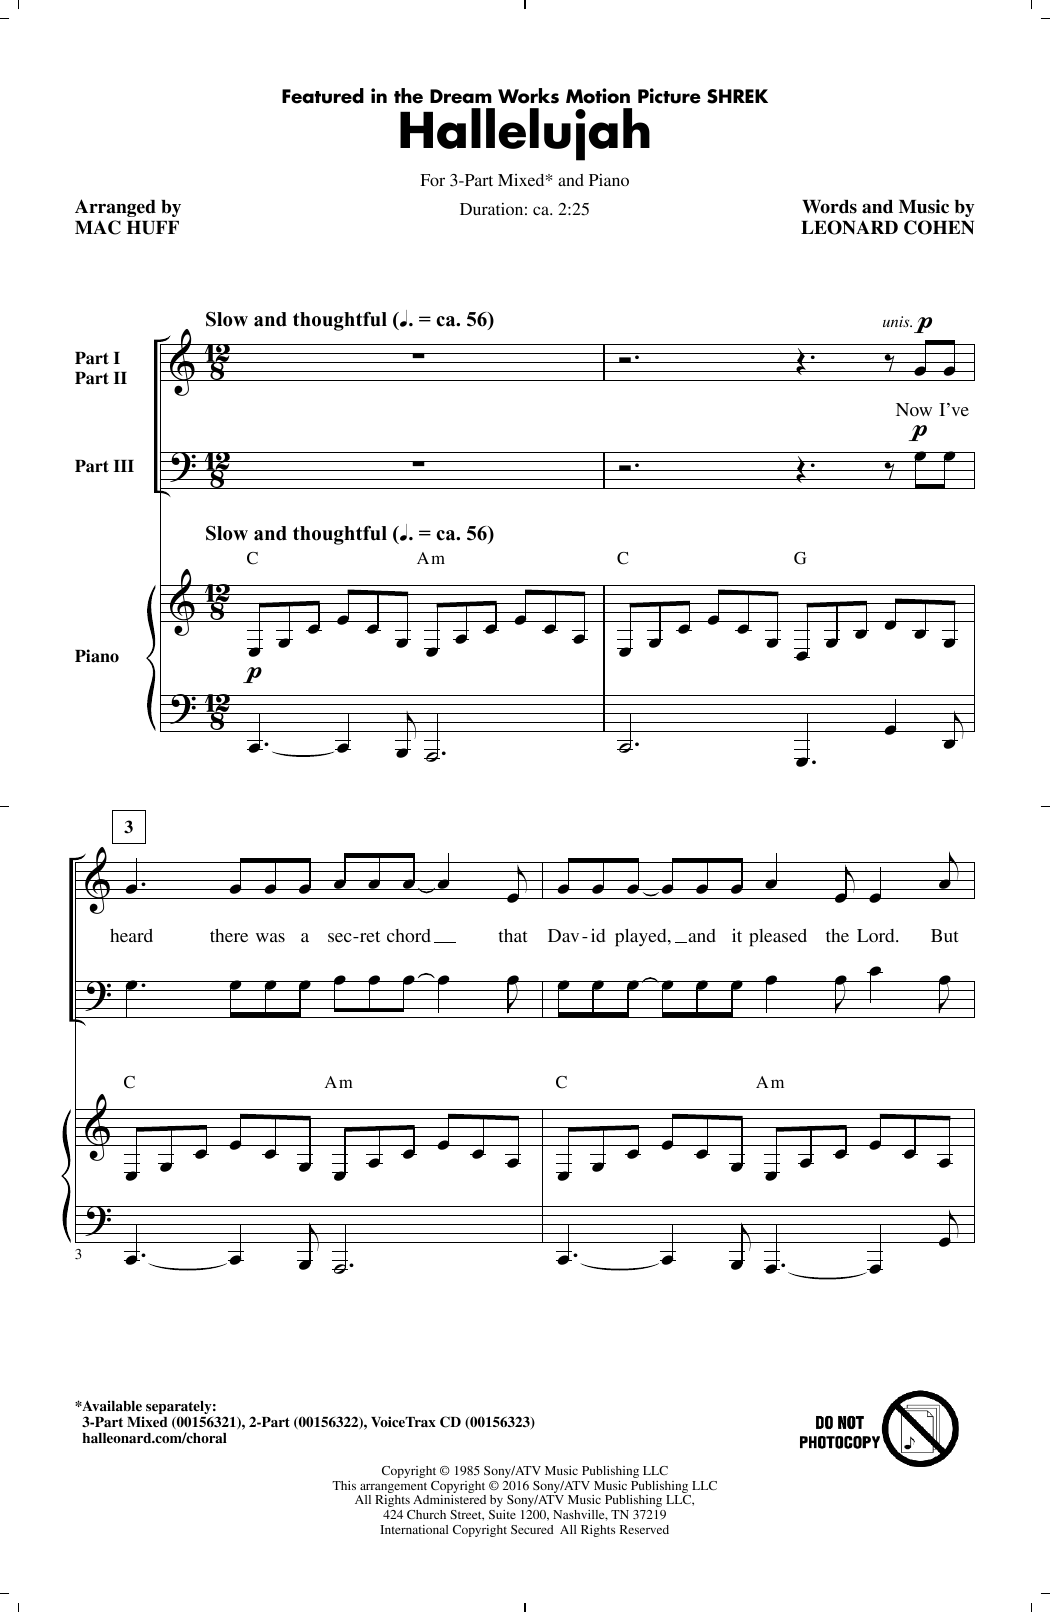 Leonard Cohen Hallelujah (arr. Mac Huff) sheet music notes and chords arranged for 3-Part Mixed Choir